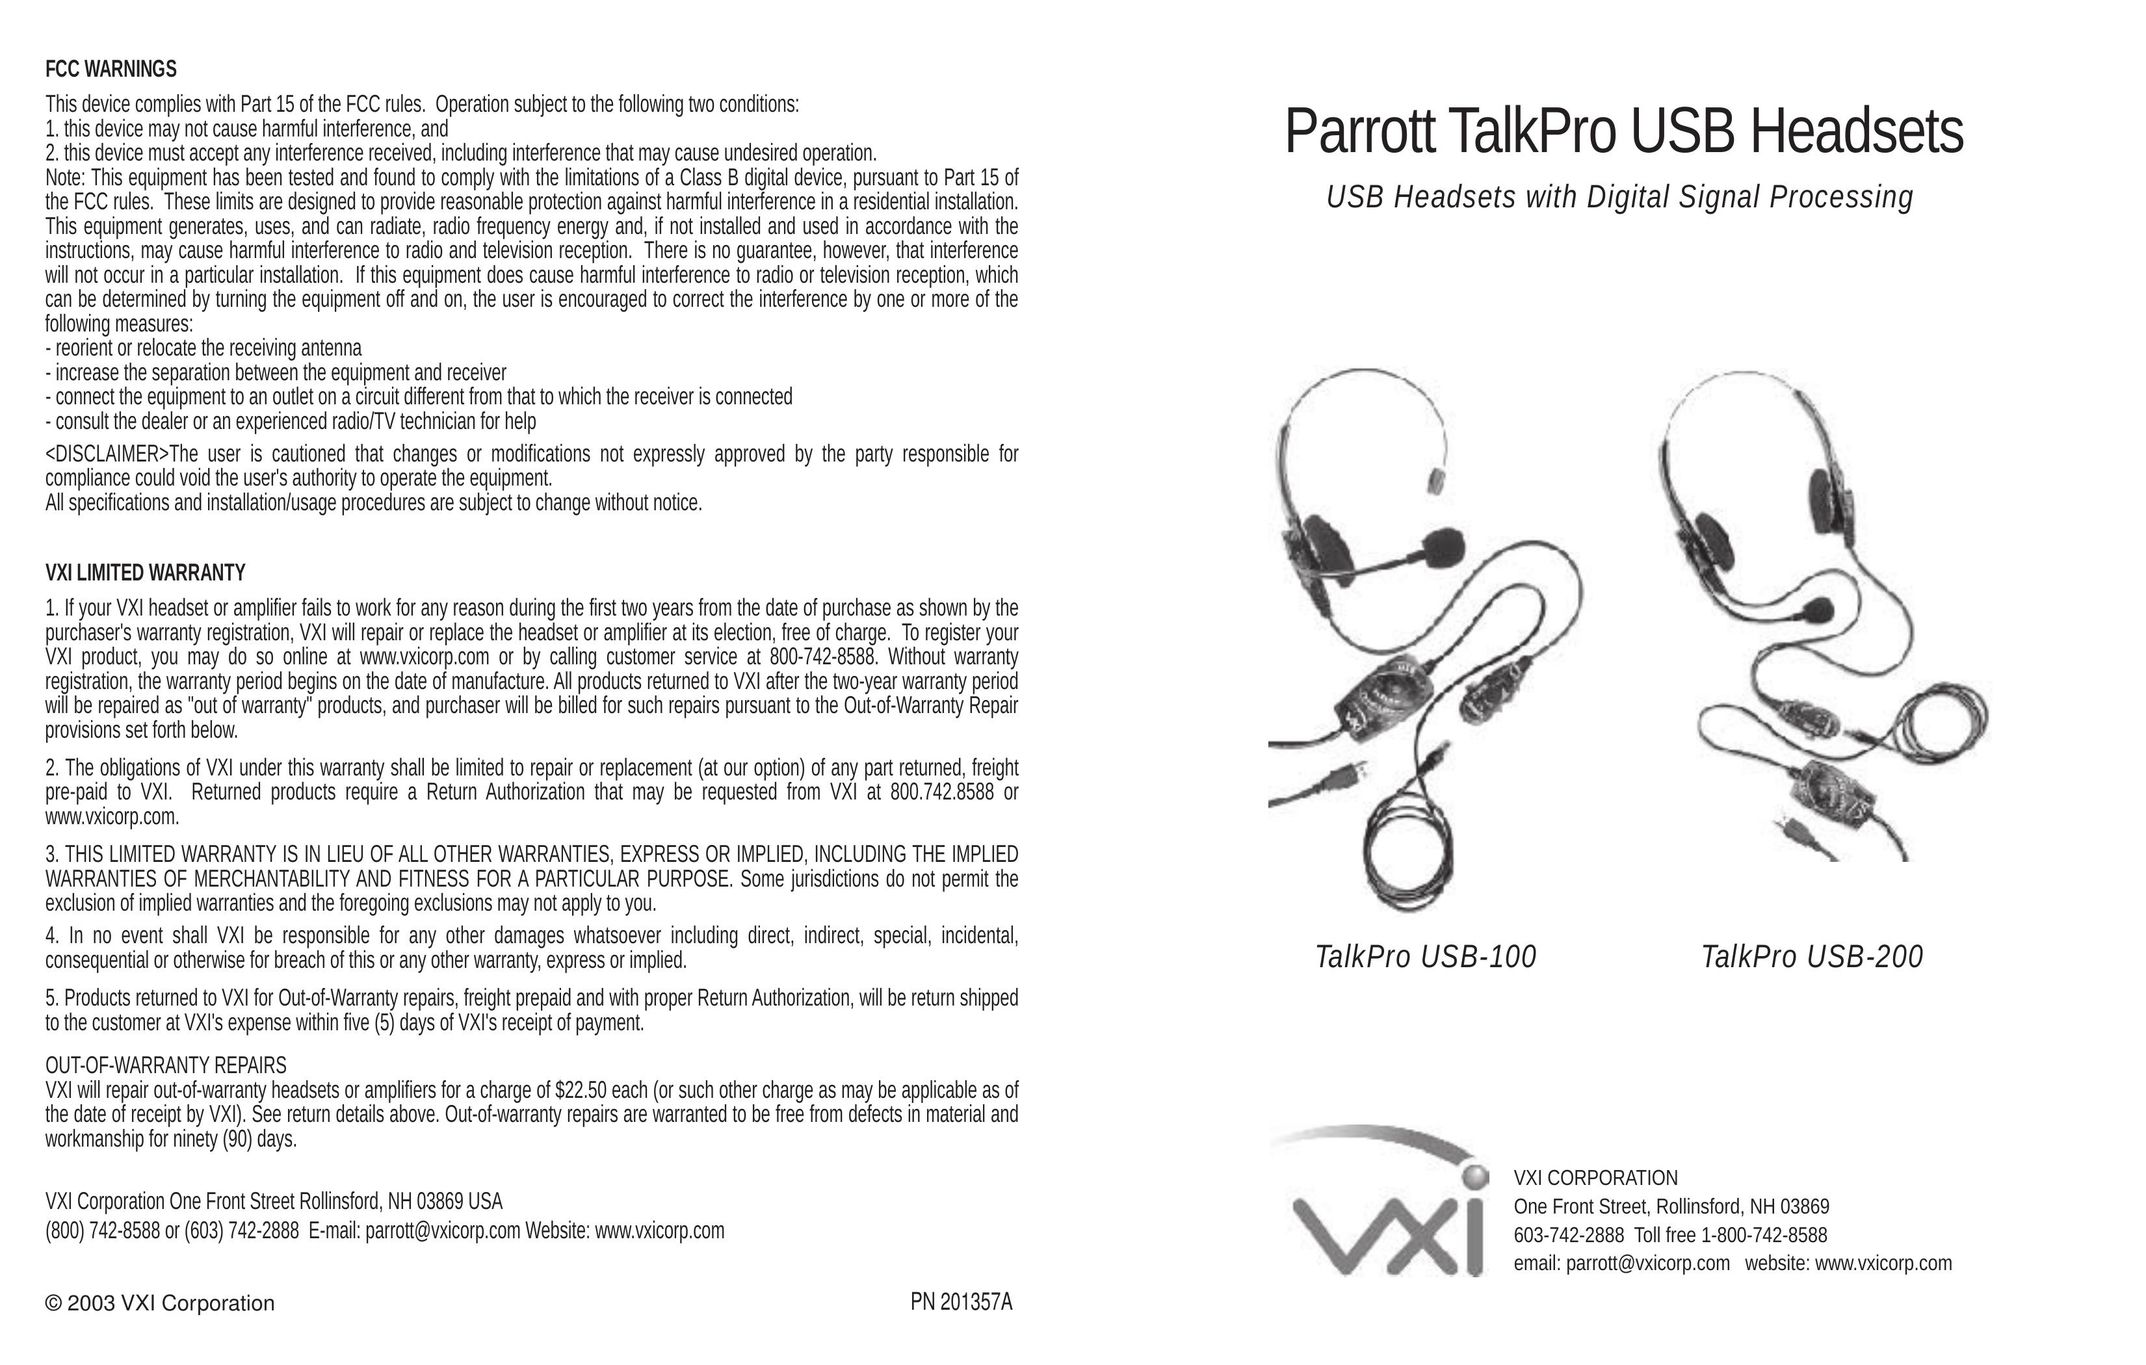 VXI USB 200 Headphones User Manual